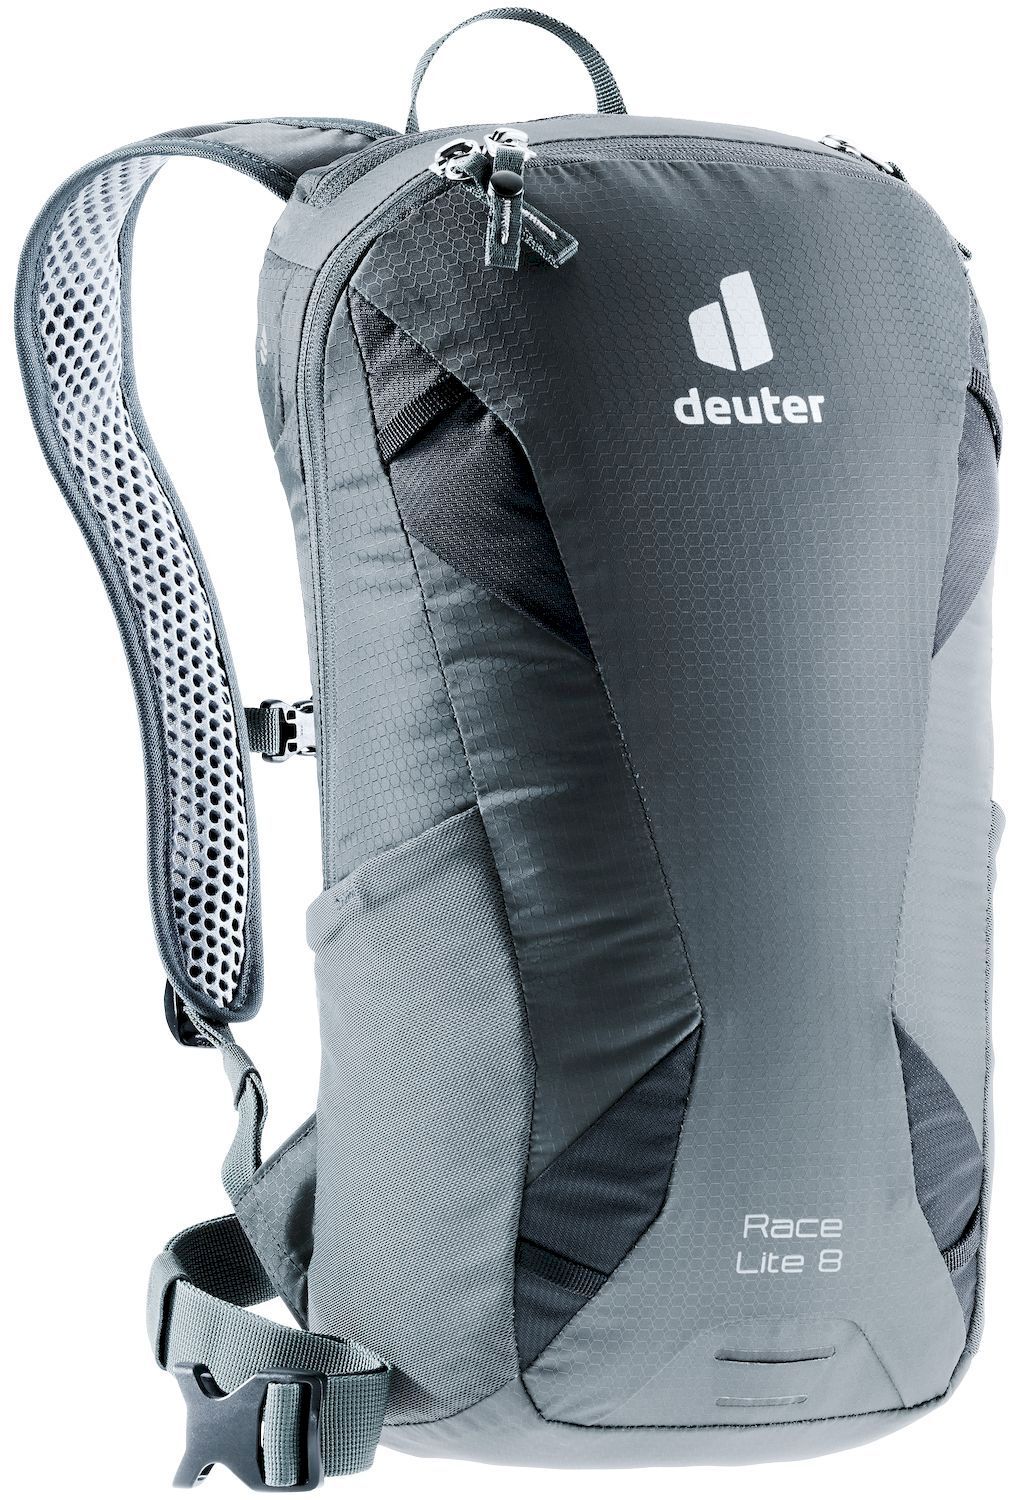 Deuter Race Lite - Cycling backpack